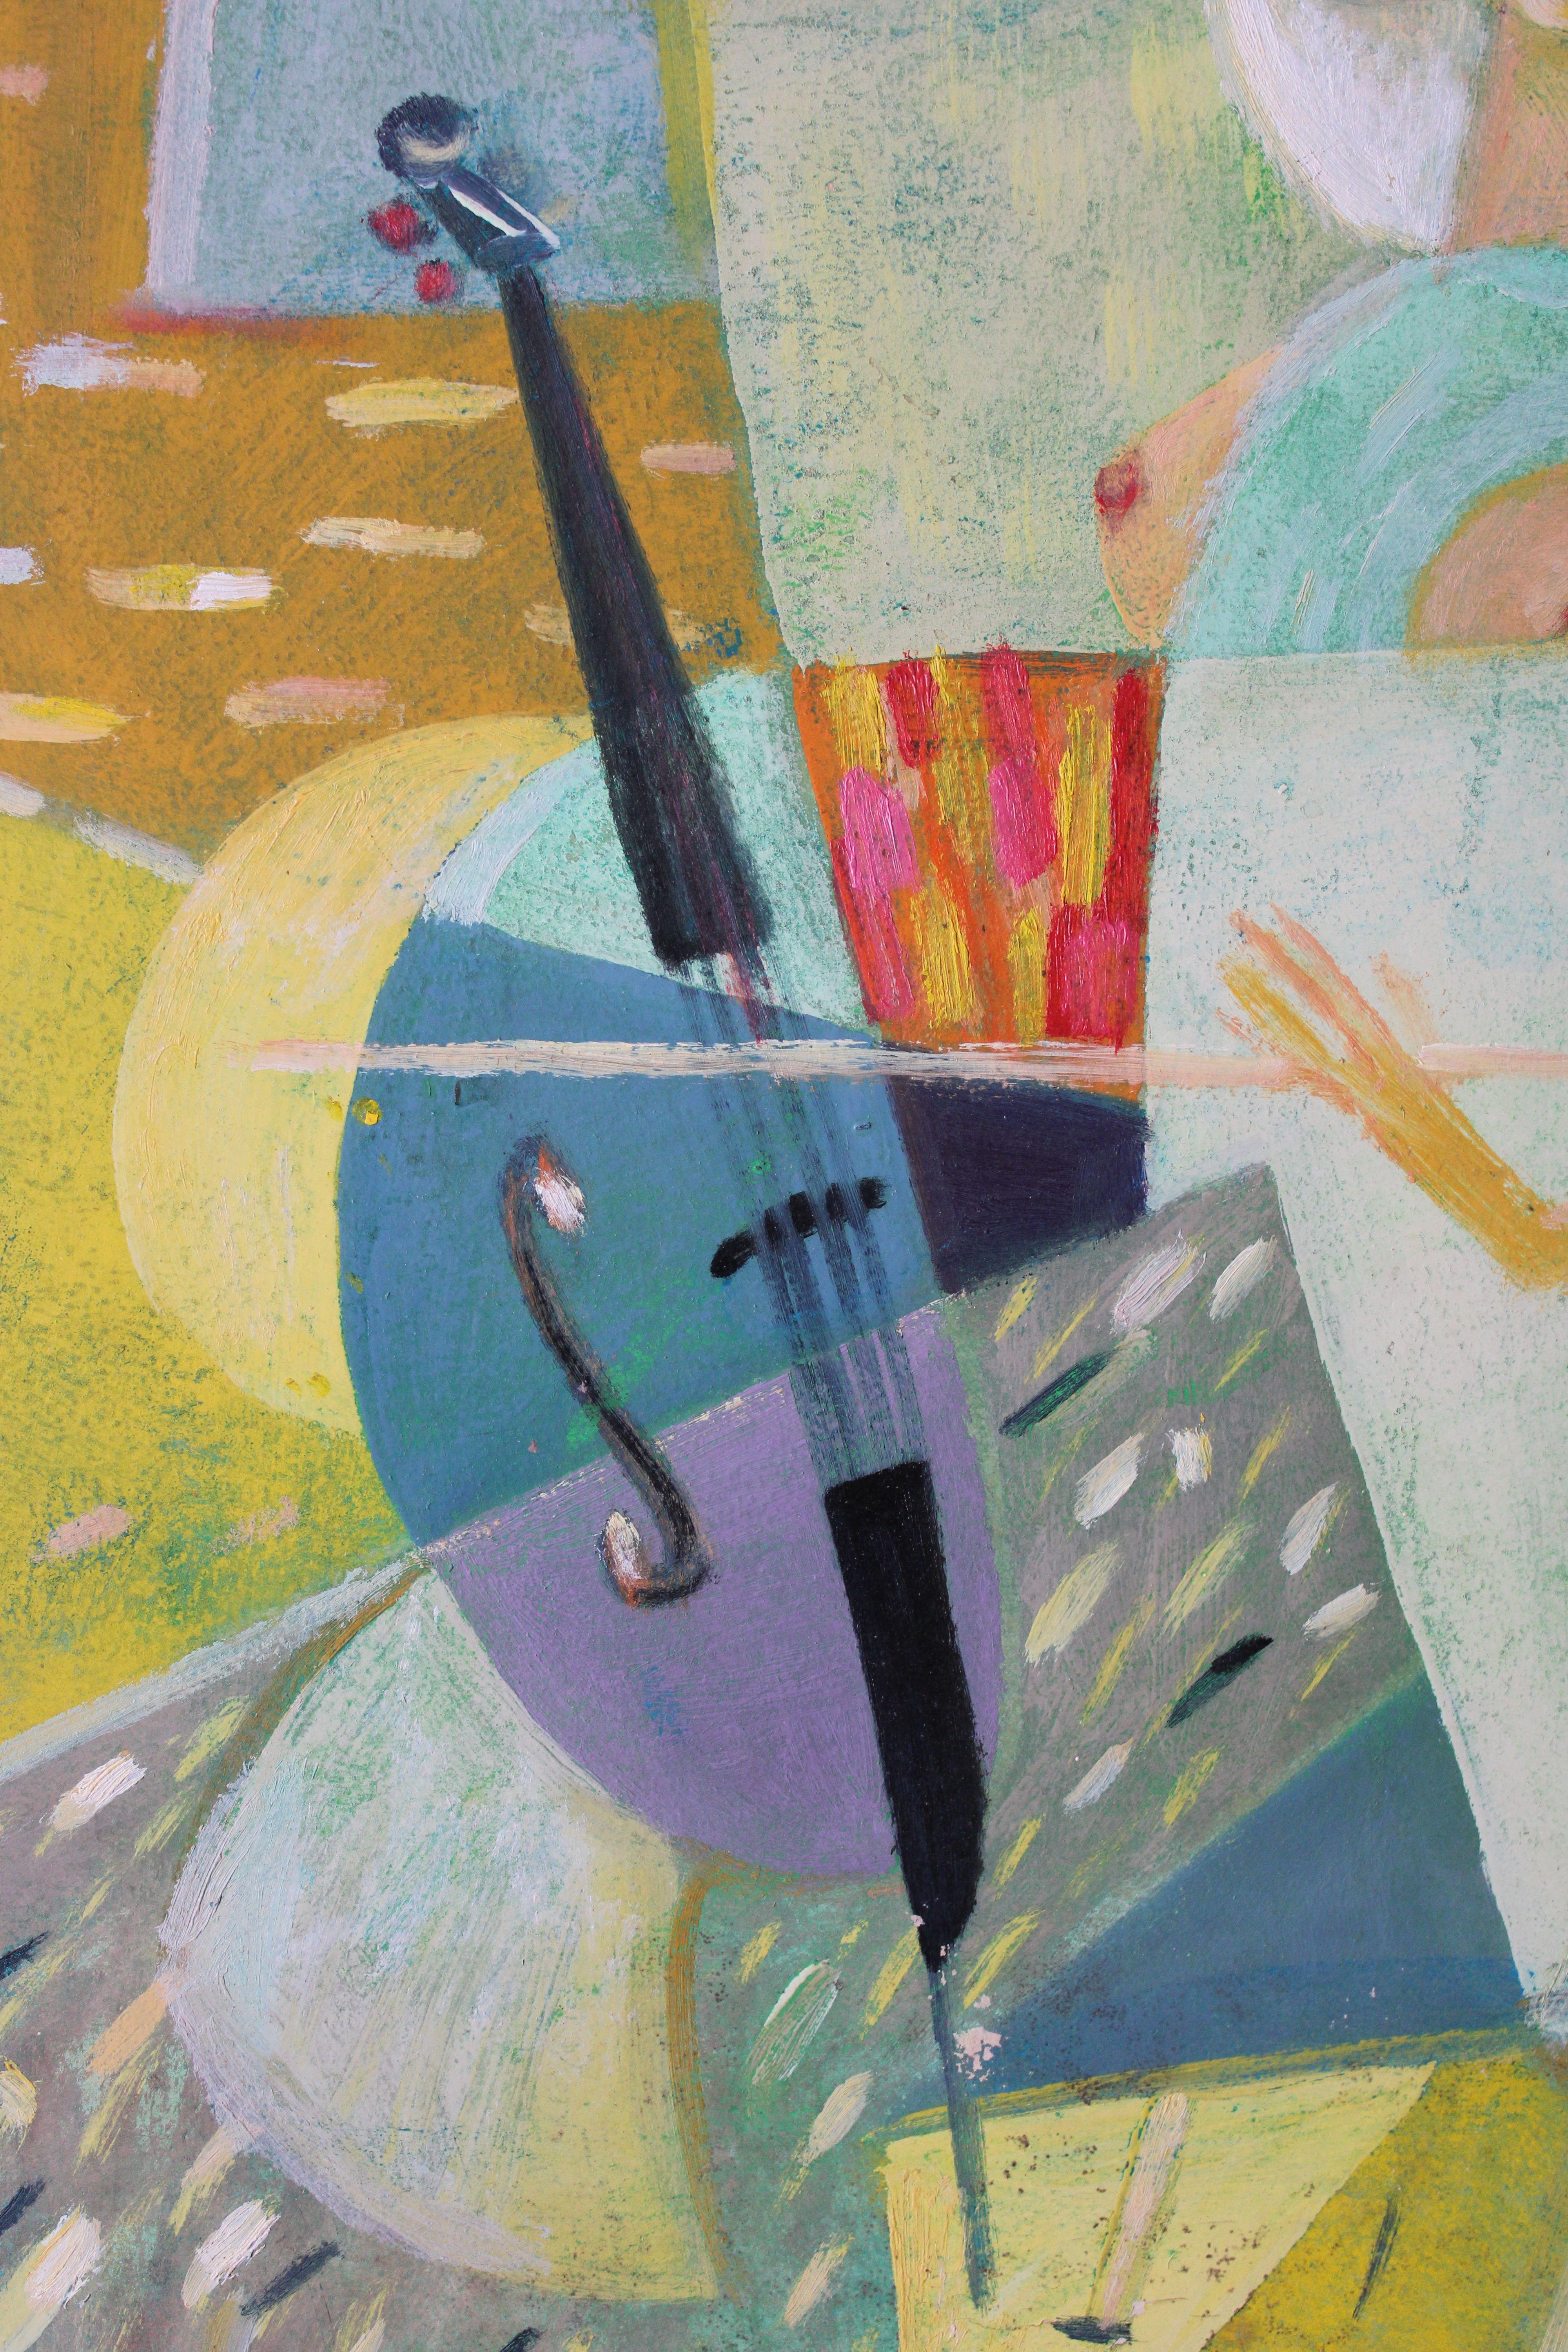 Constructive cellist

2001., cardboard, oil, 64x45 cm

